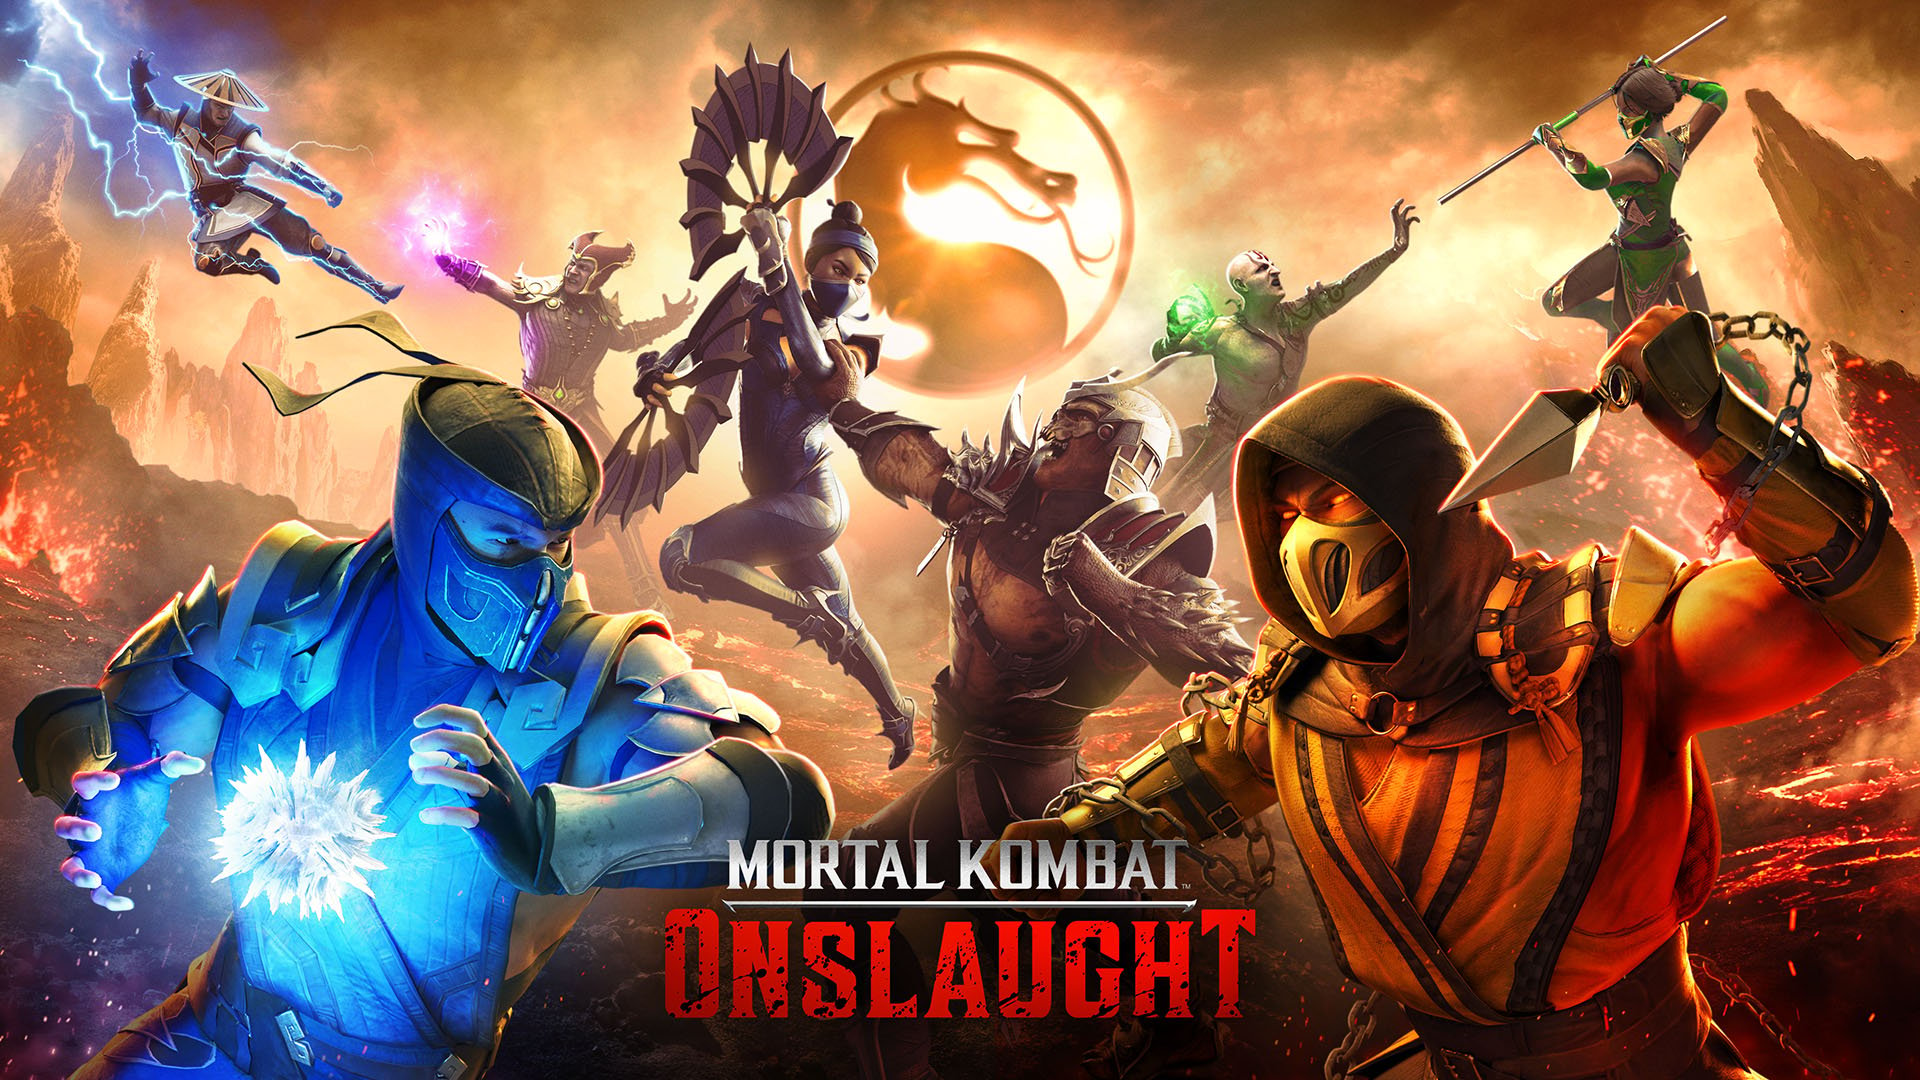 New Mortal Kombat Shaolin Monks Walkthrough APK for Android Download